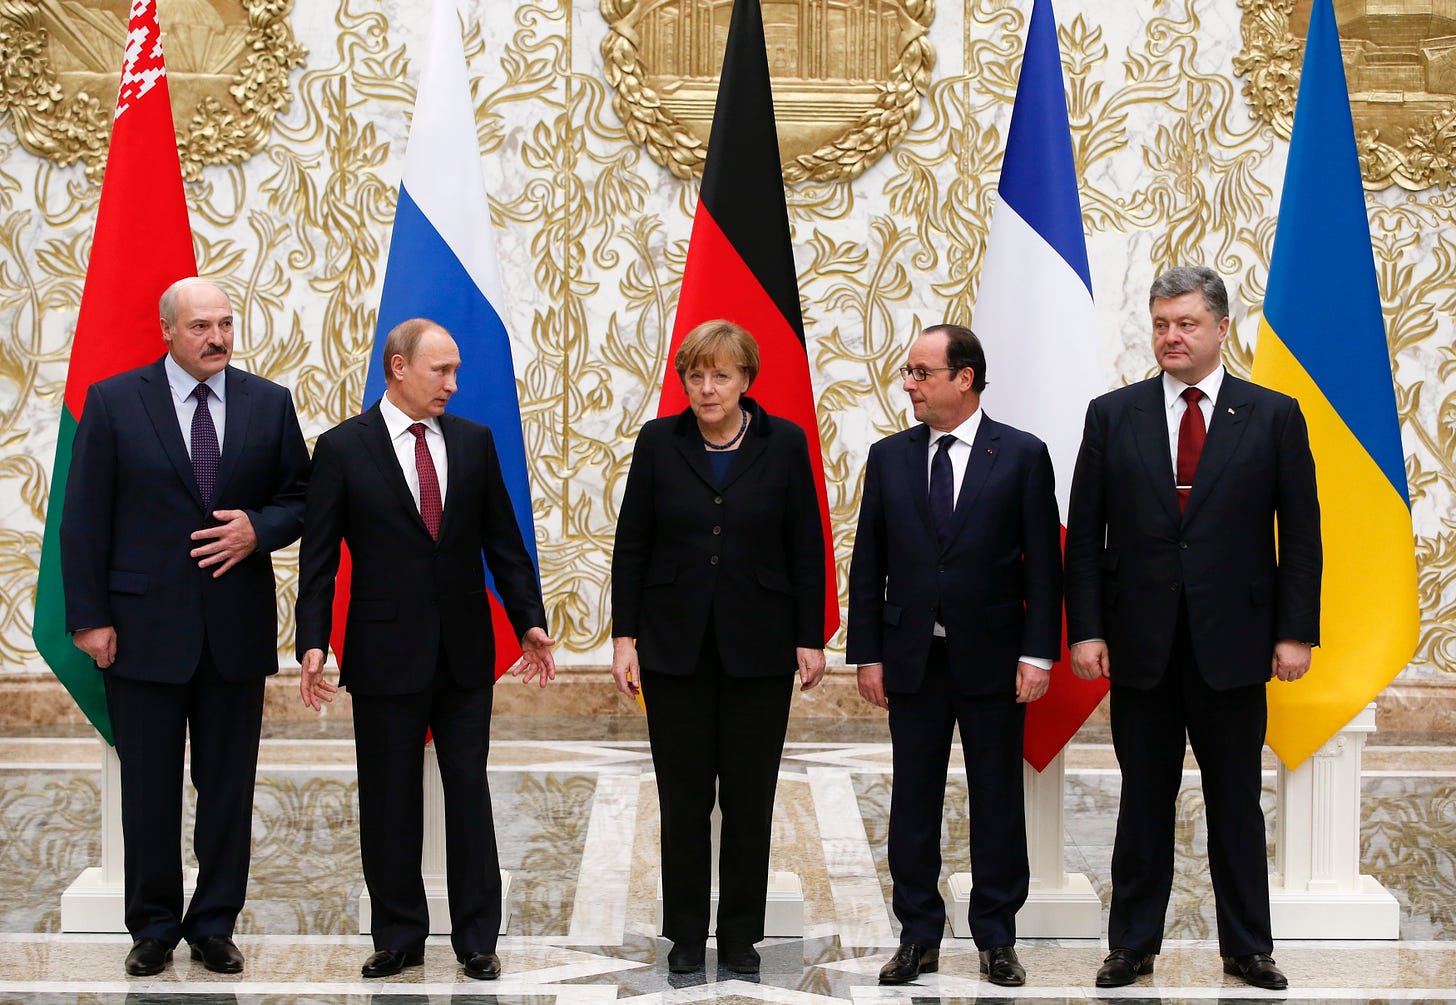 Minsk II—will it meet a better fate than Minsk I?